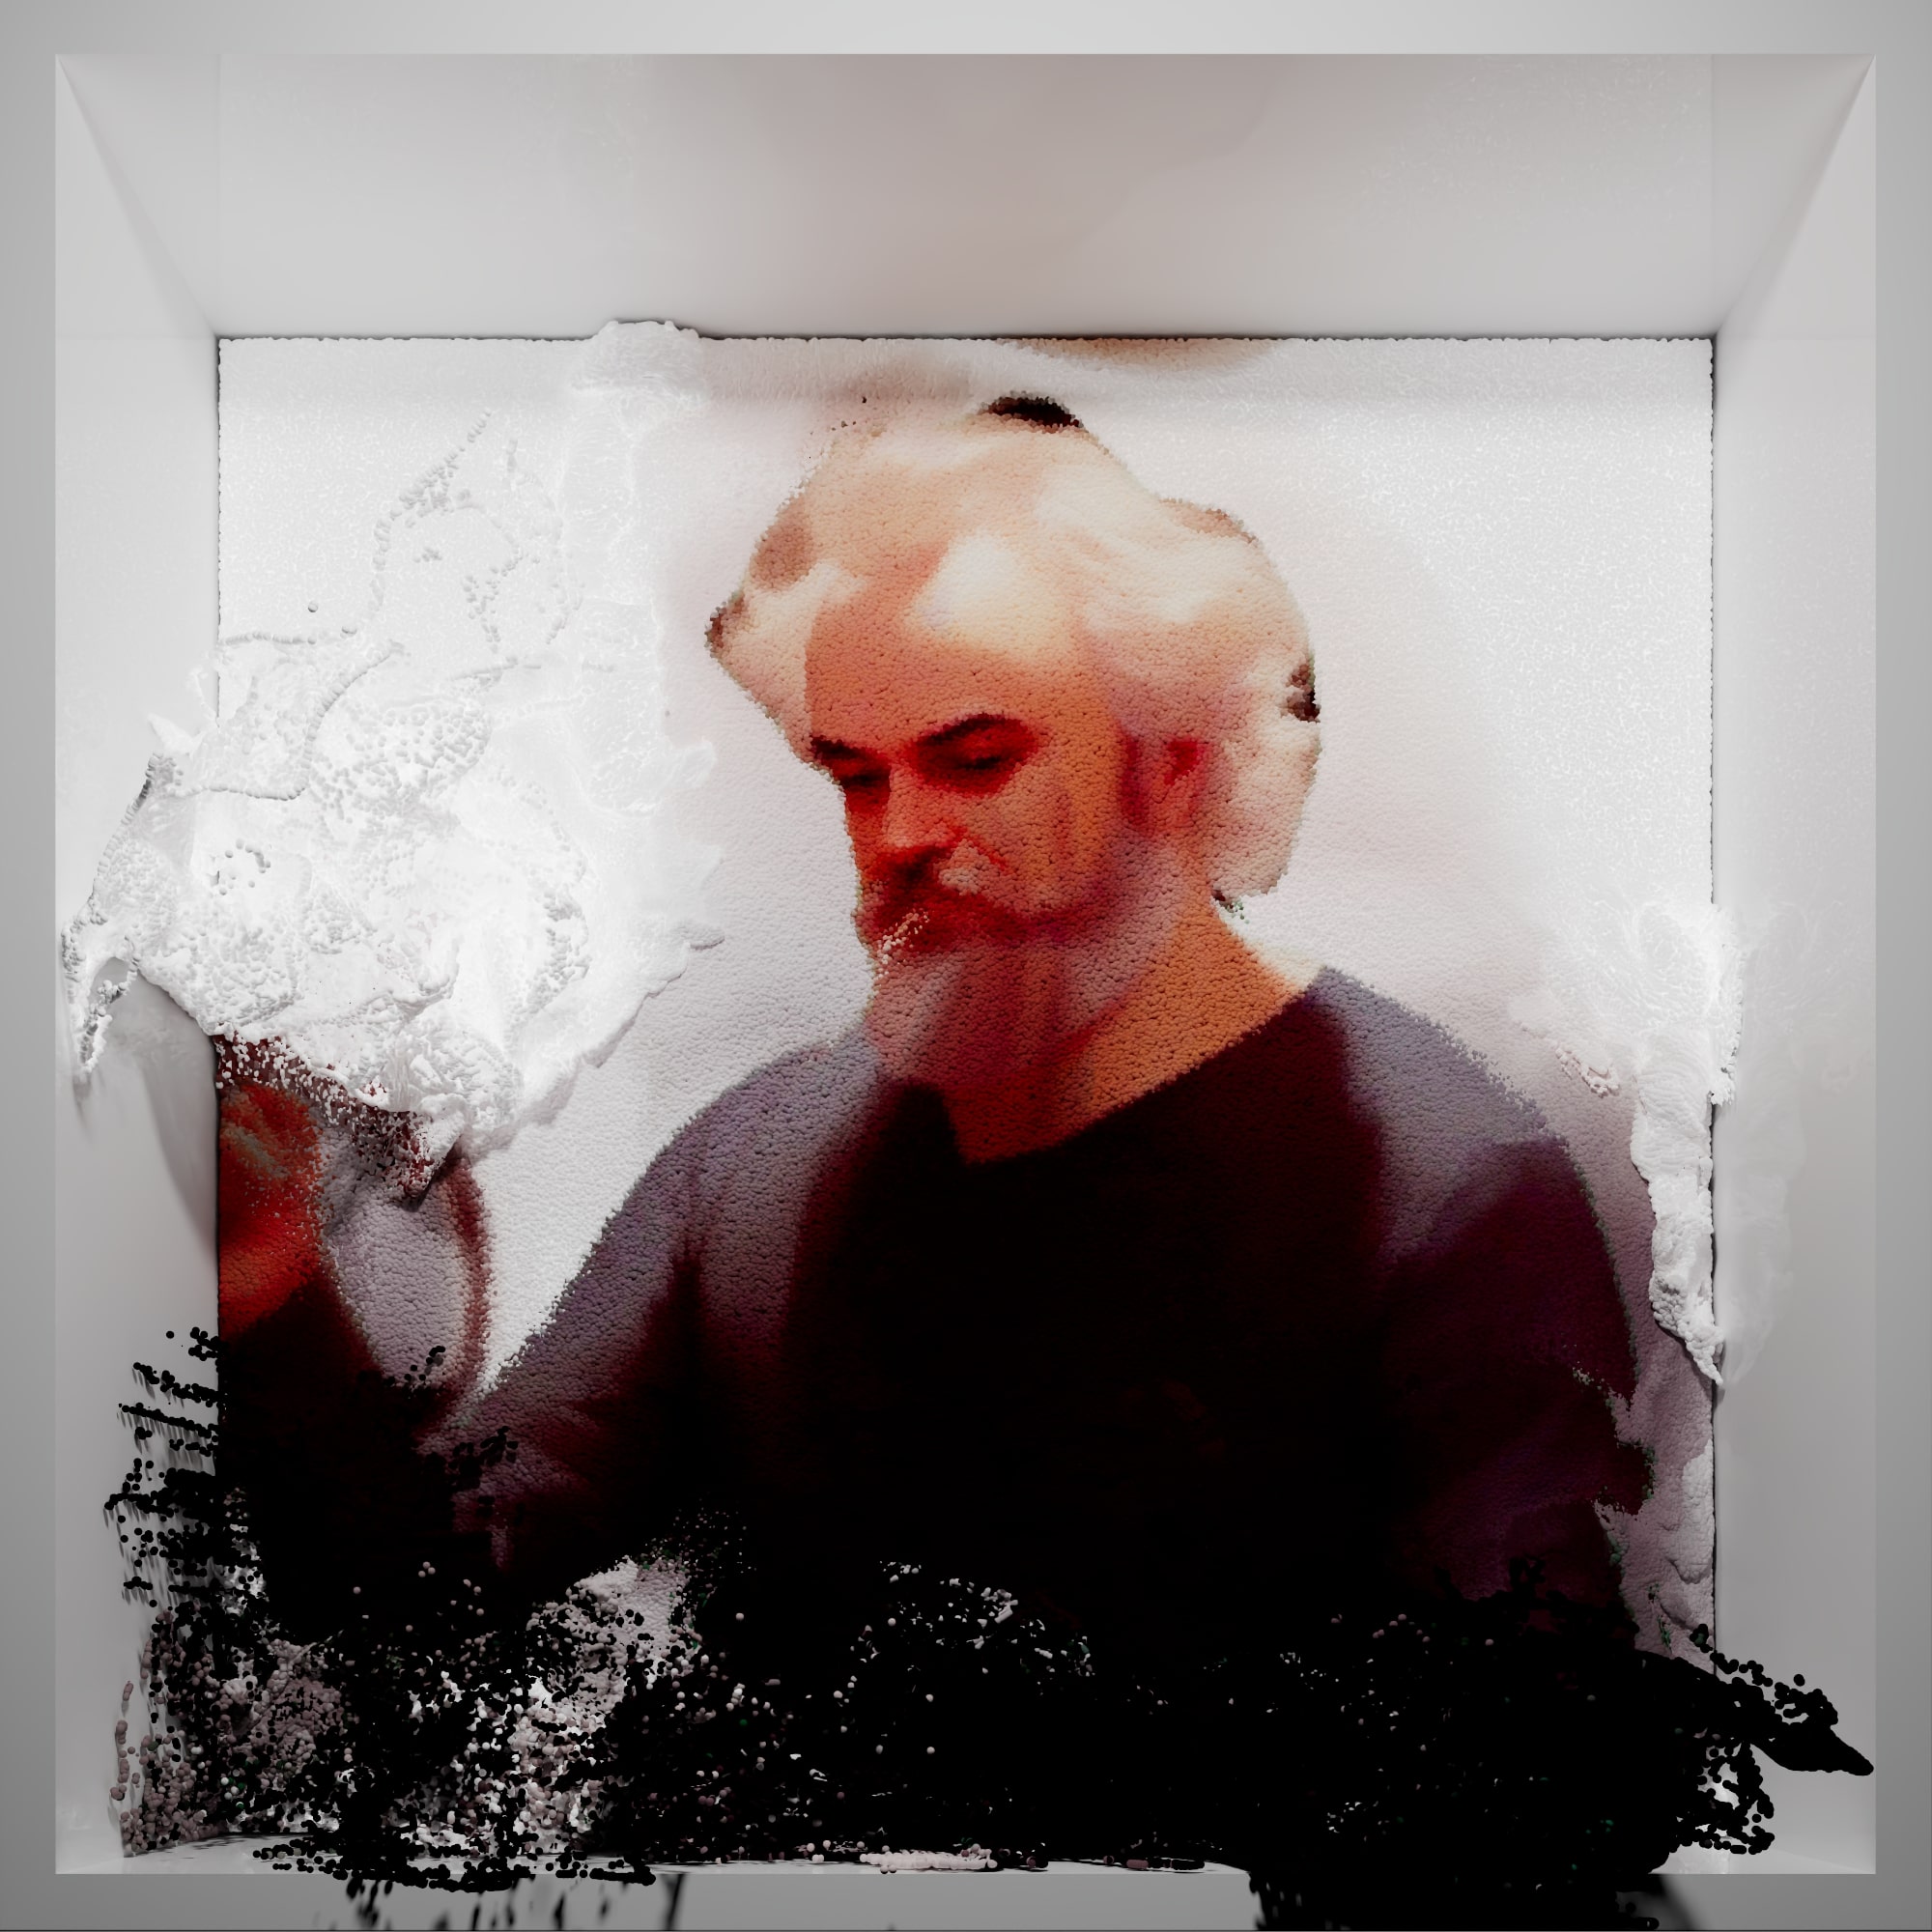 An AI generated image of the Czech composer Dvorak